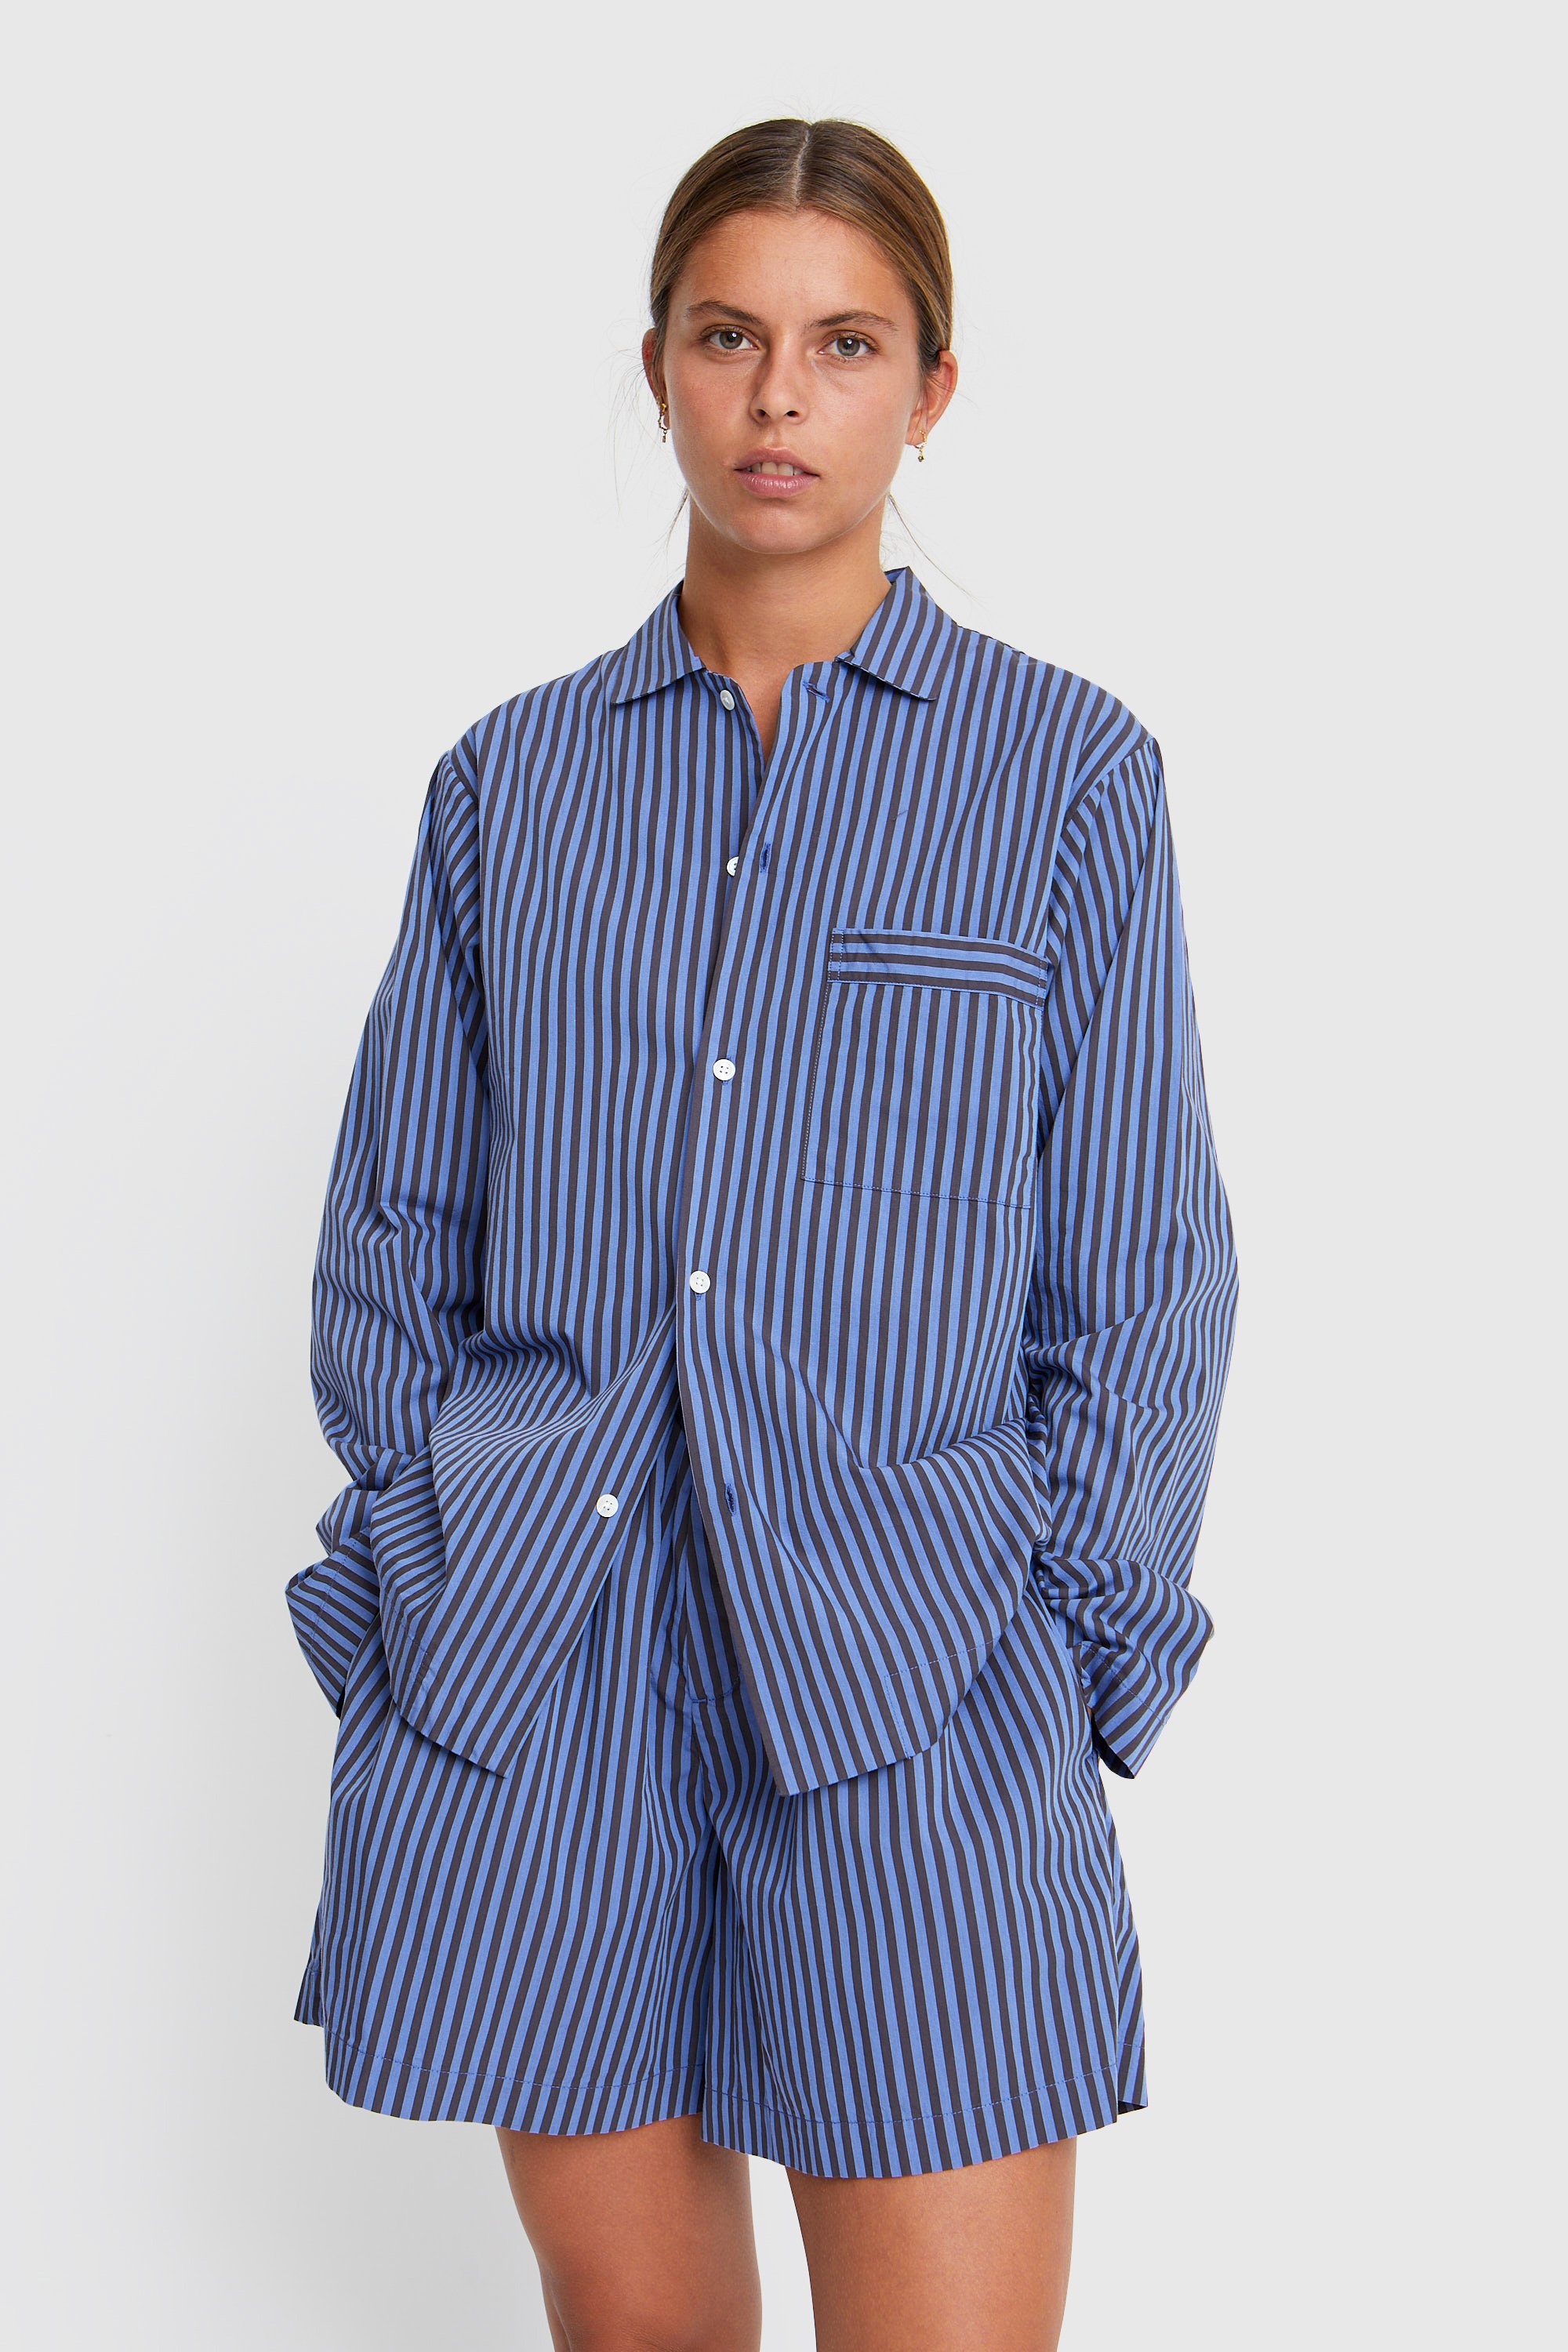 Tekla Pyjamas Shorts Vemeuil stripes | WoodWood.com